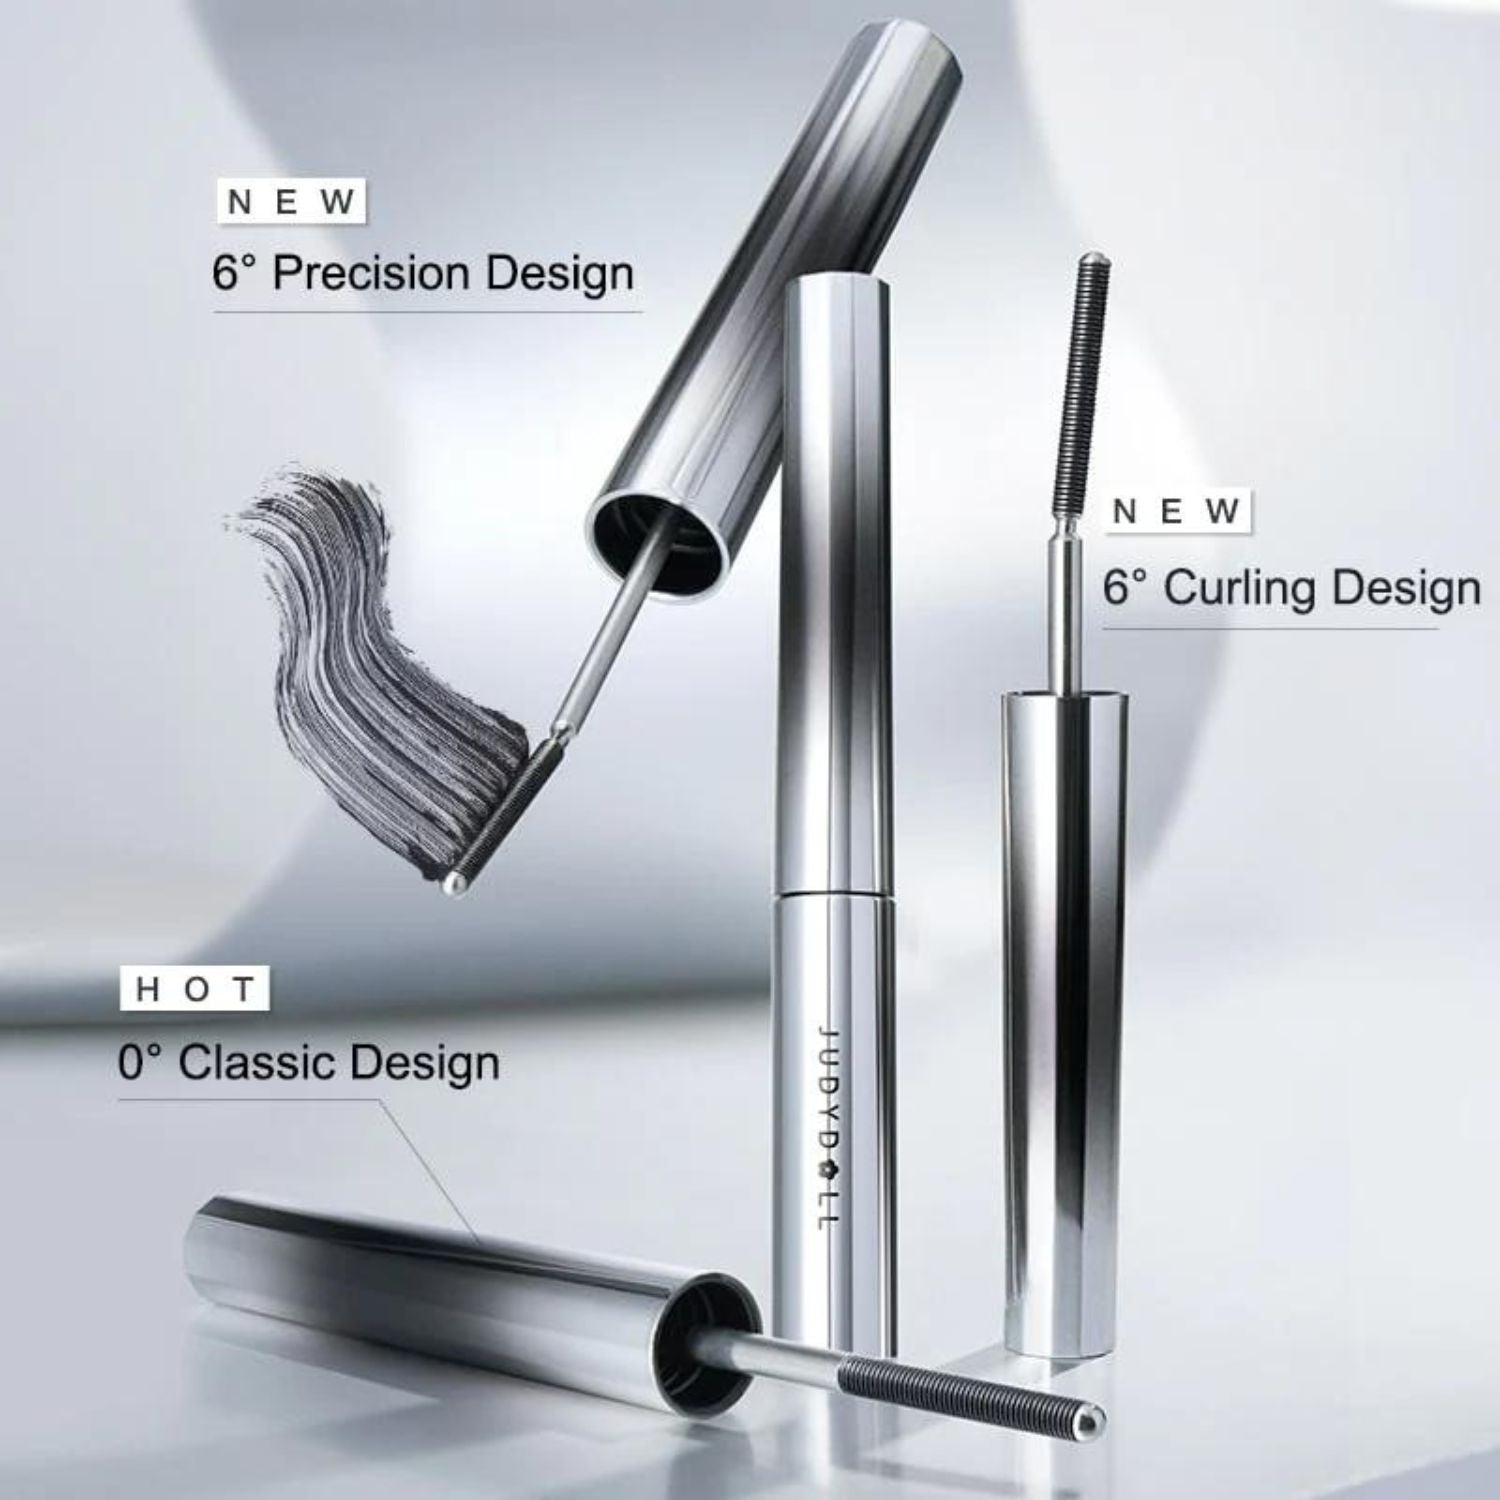 3D Curling Eyelash Iron Mascara 6°Curling Design 01 Black - Judydoll | Kiokii and...